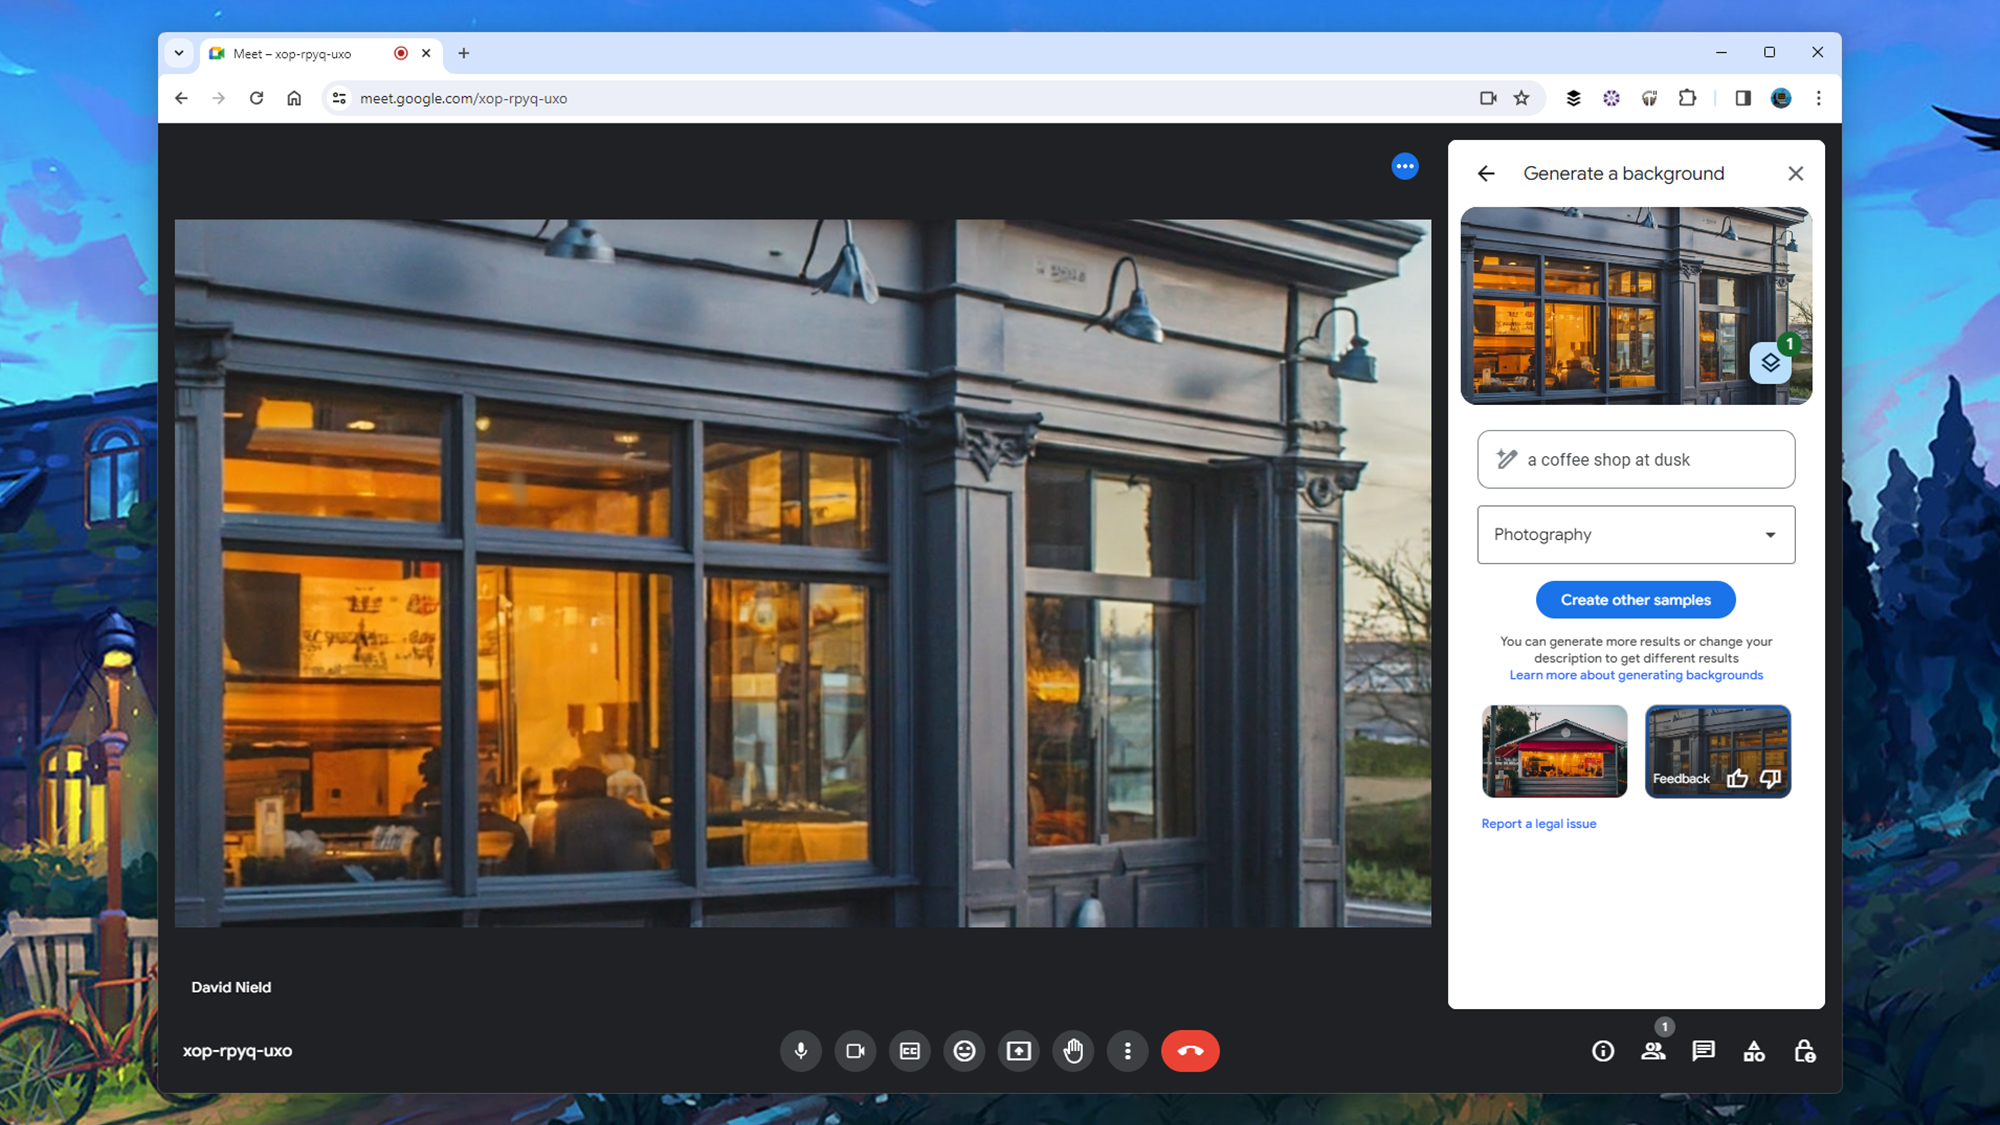 screenshot of google meet screen, showing an AI command of "coffee shop at dusk"